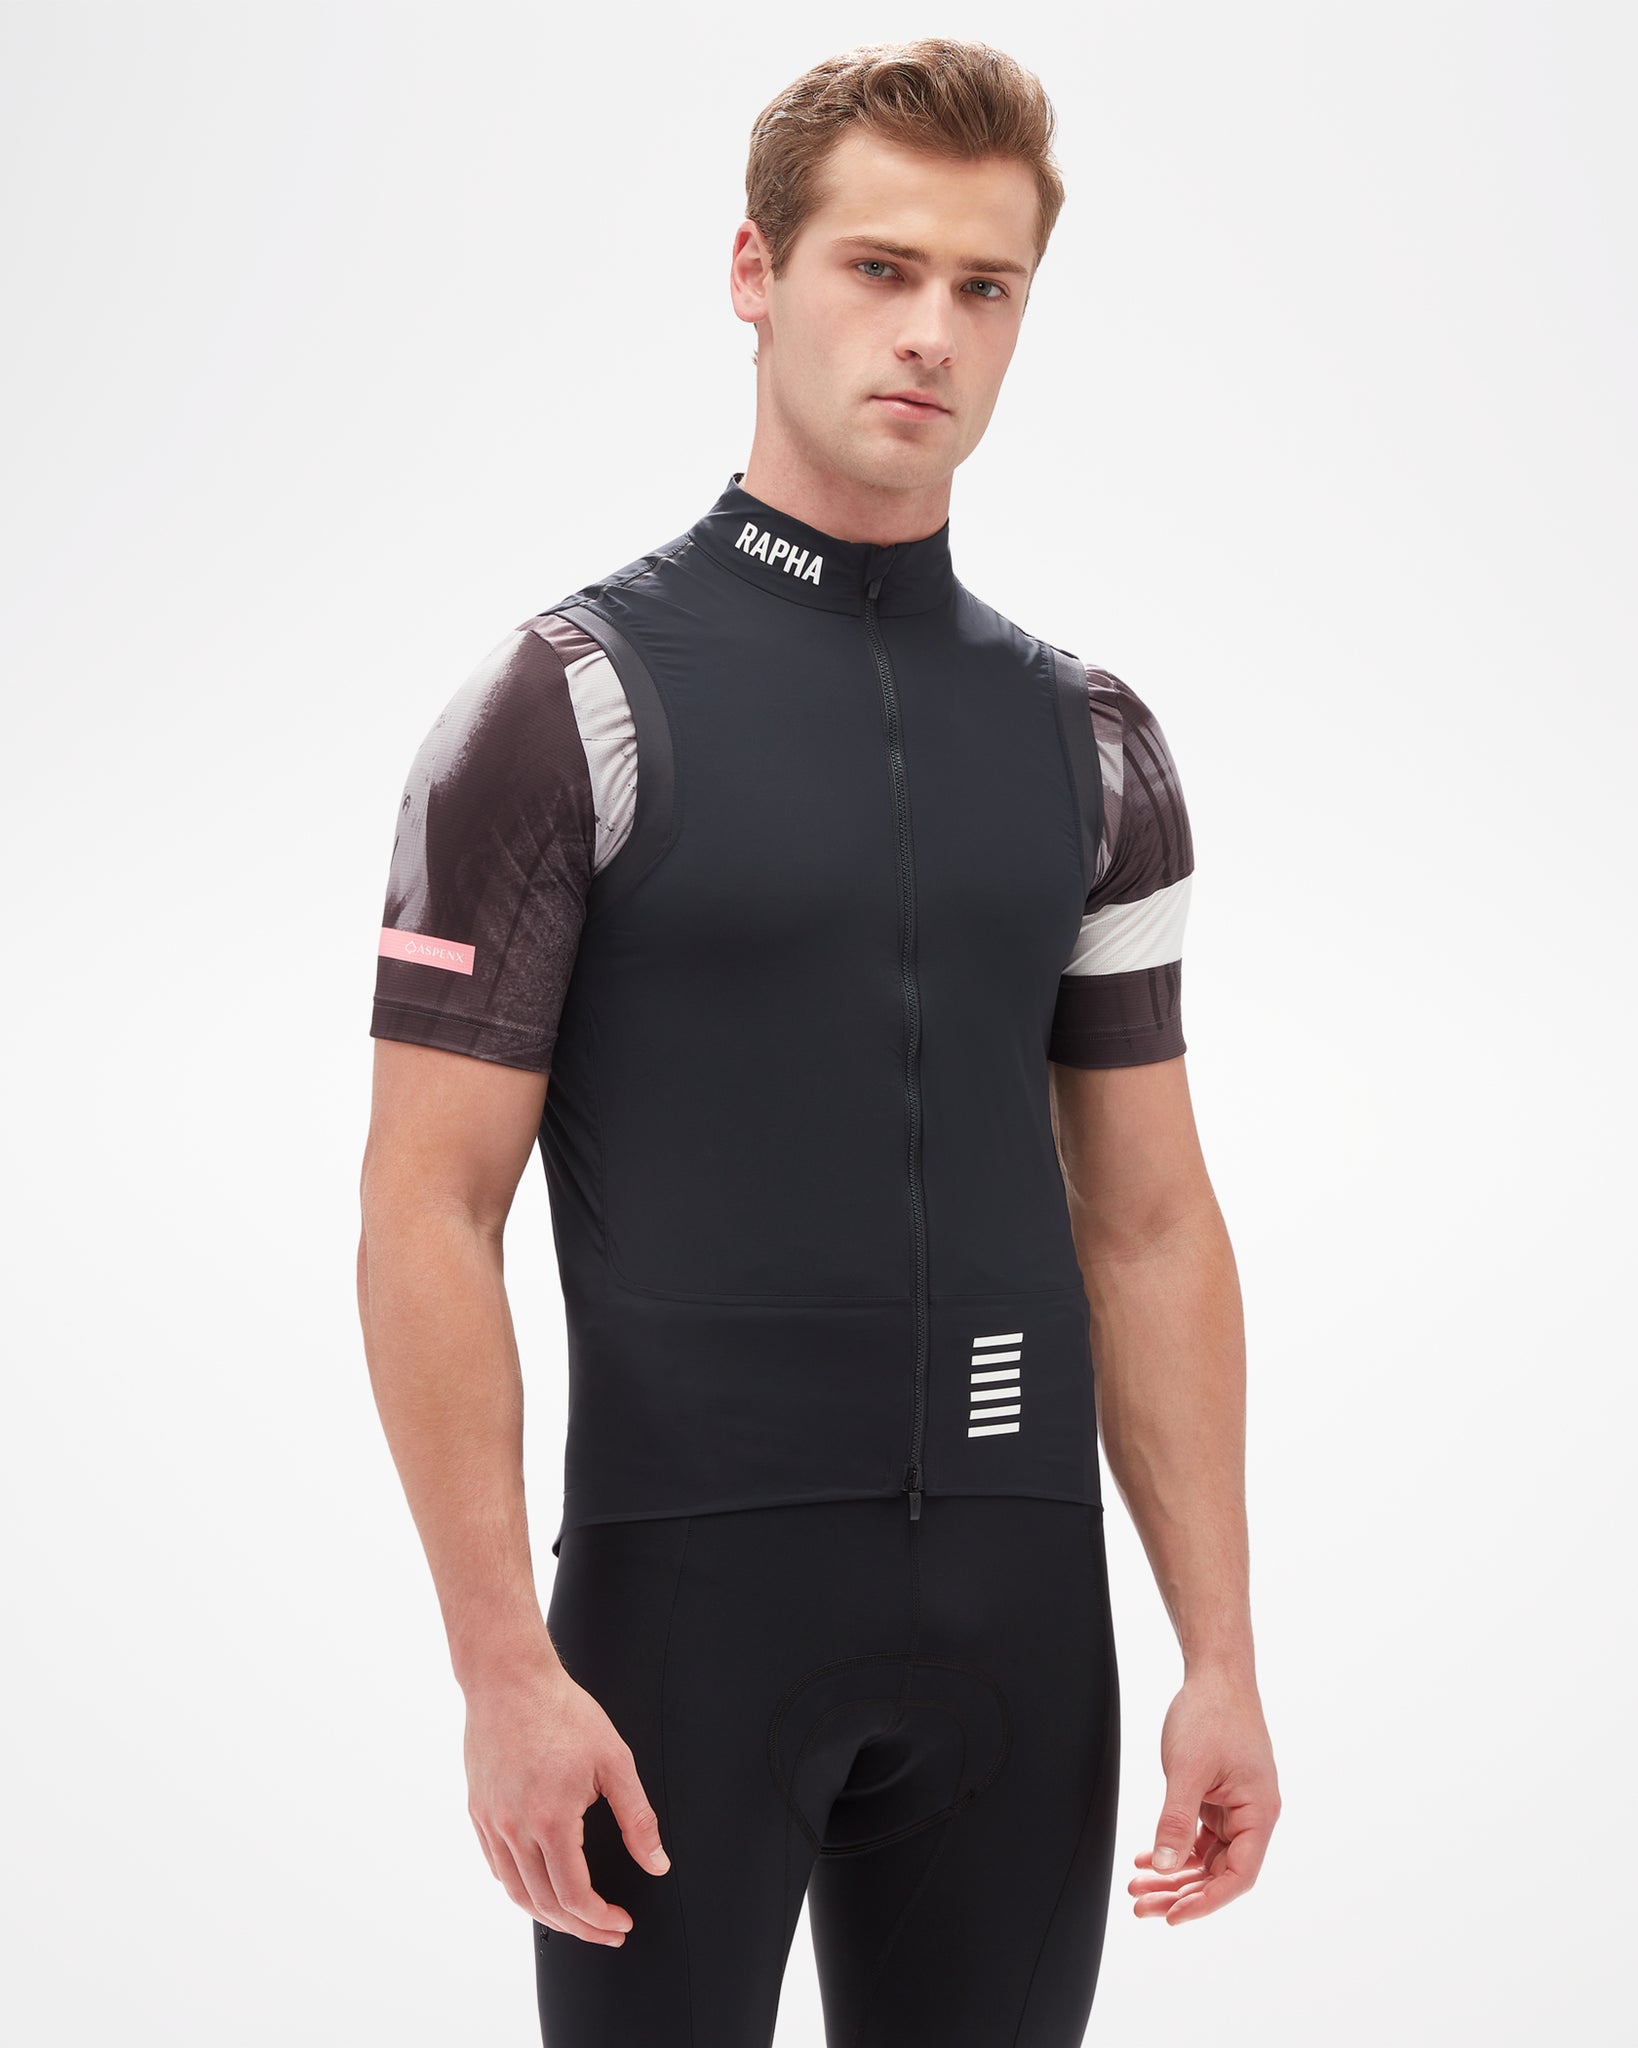 ASPENX Rapha Men's Gilet Vest | Premium Cycling Apparel